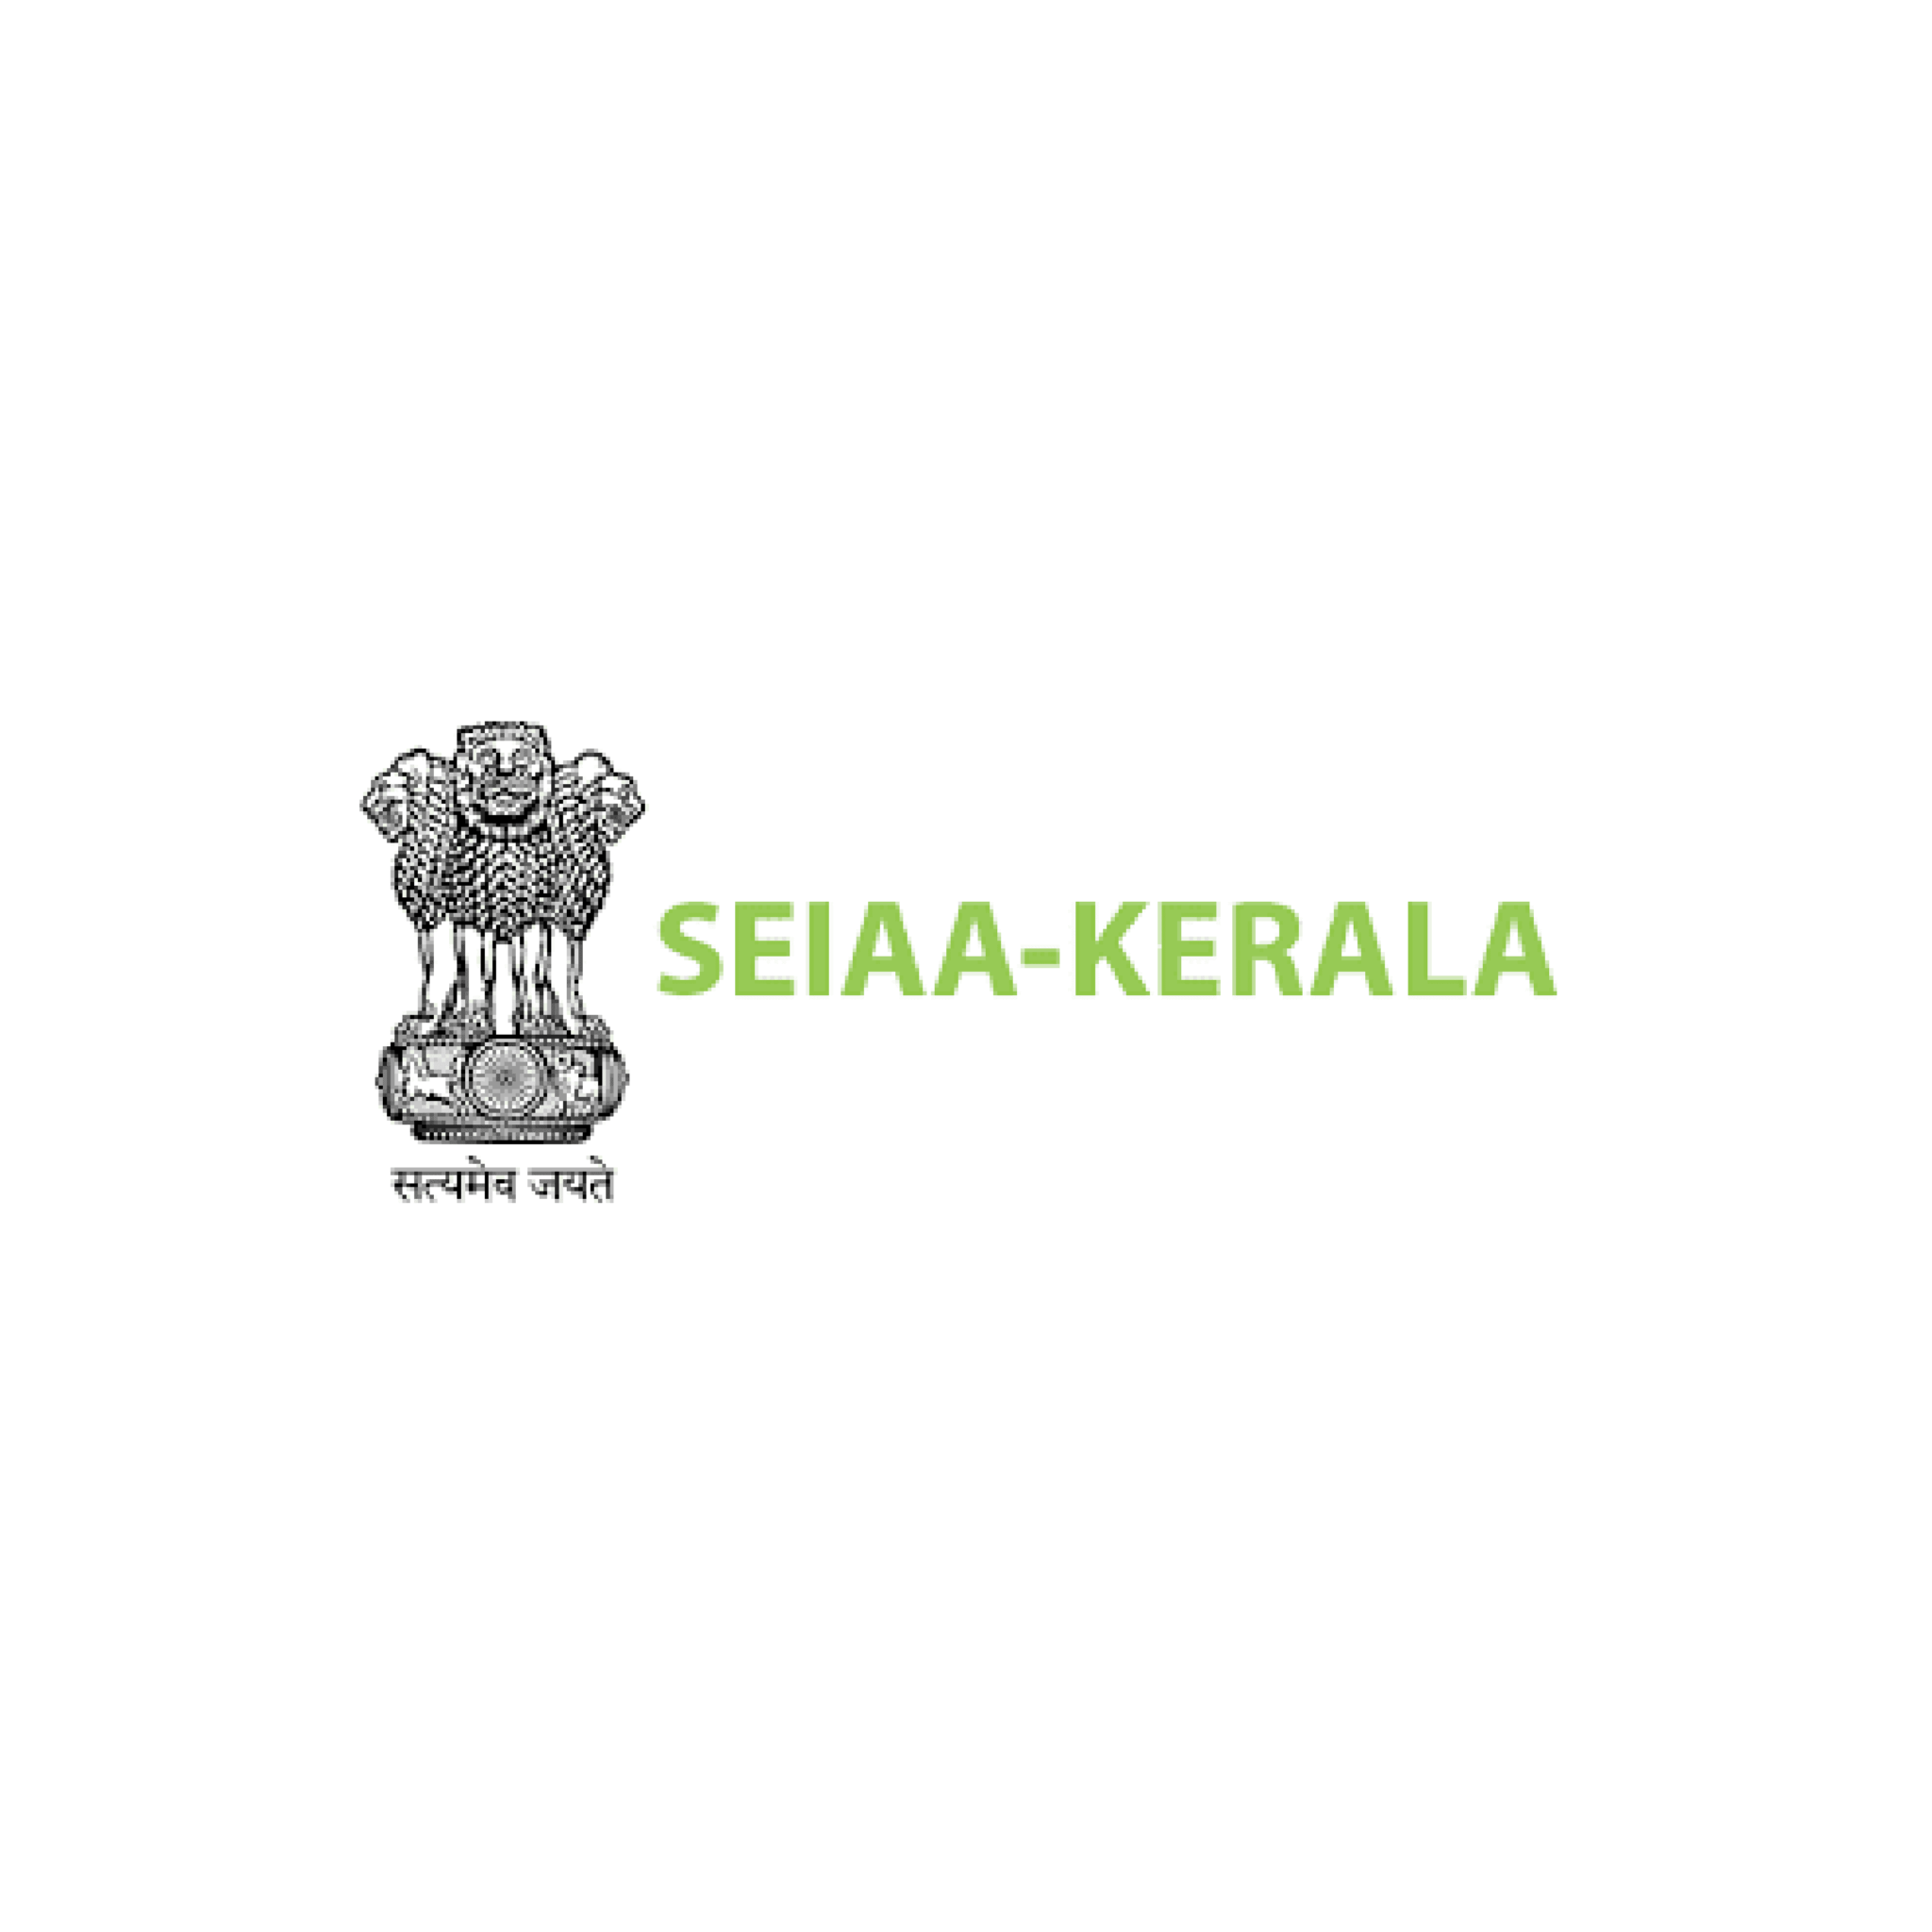 Seiaa-Kerala